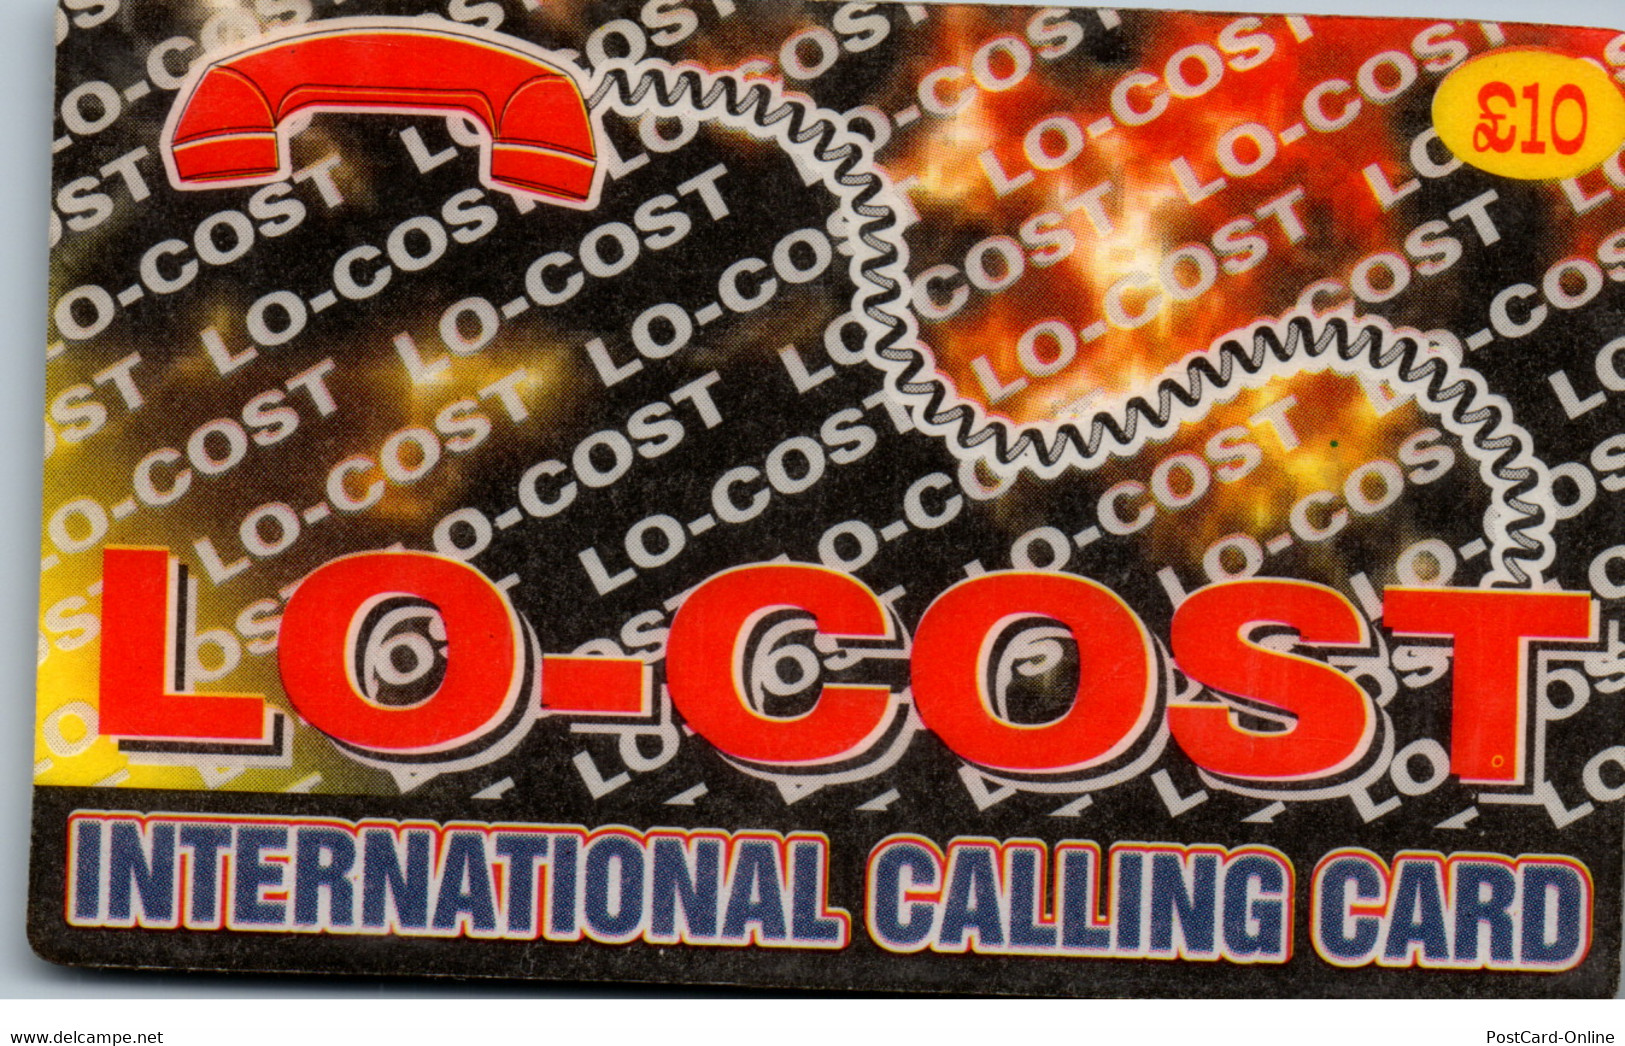 20287 - Großbritannien - Lo Cost Calling Card , Prepaid - BT Kaarten Voor Hele Wereld (Vooraf Betaald)